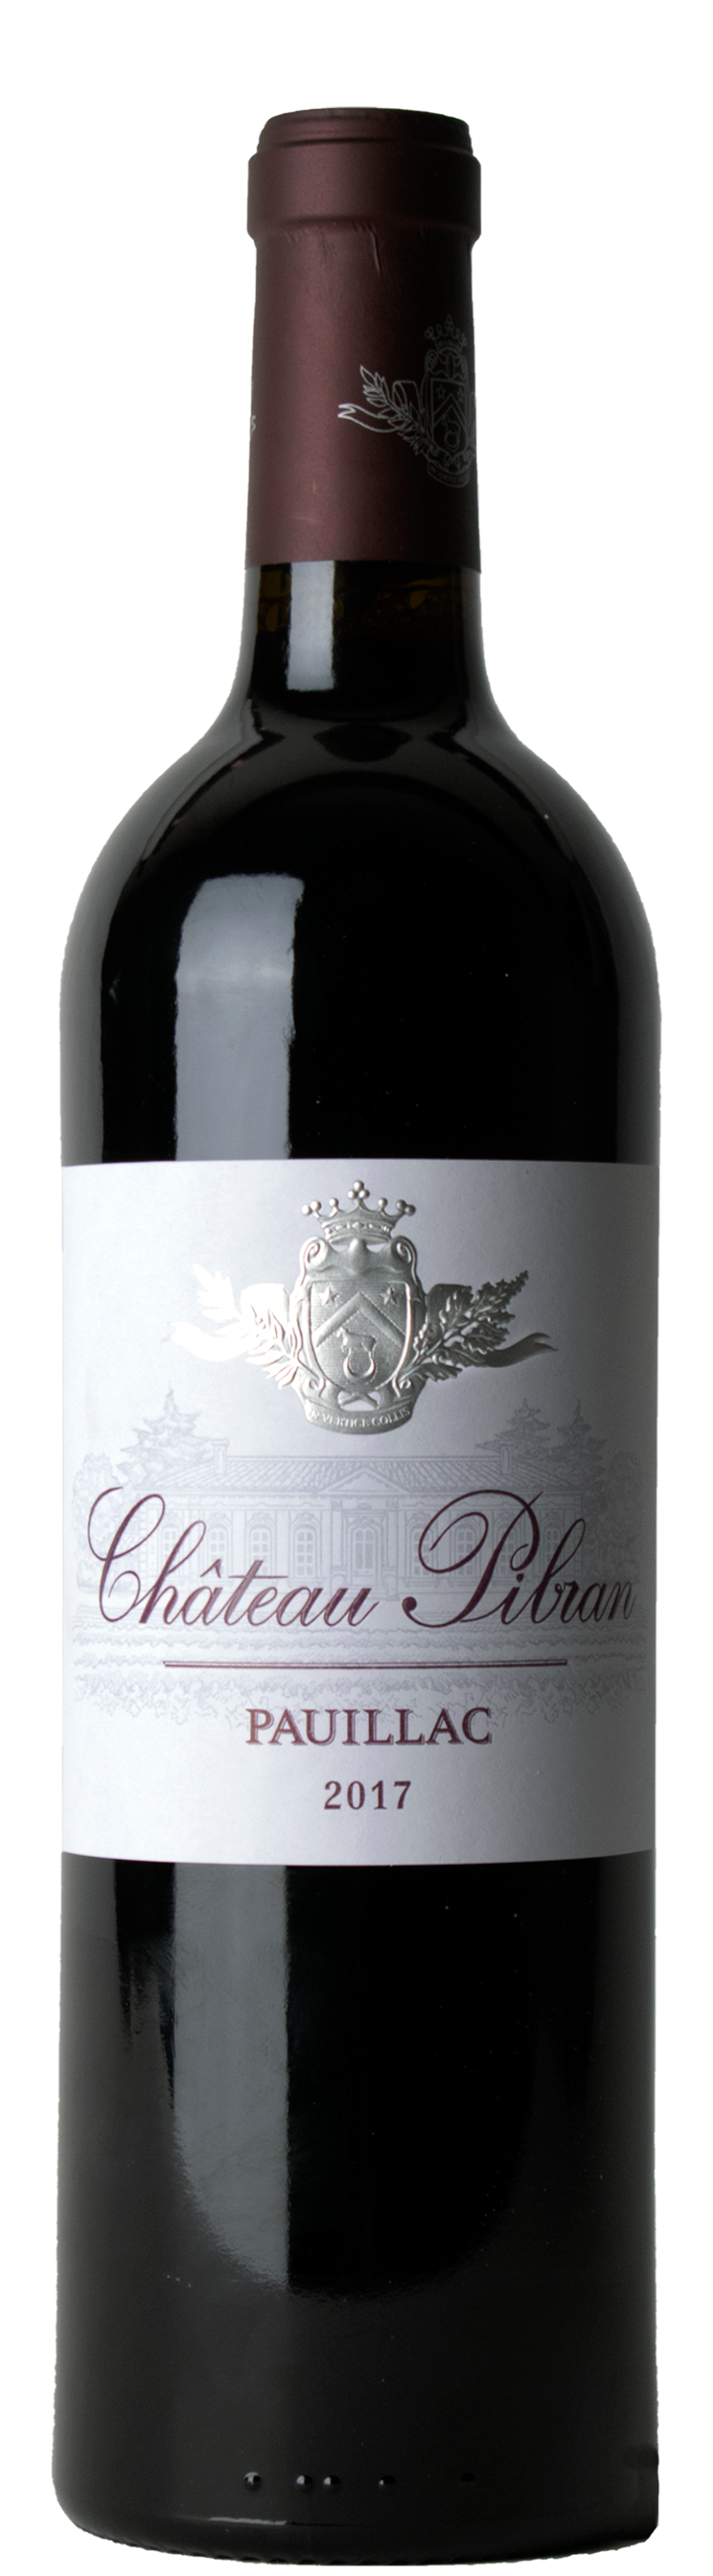 Château Pibran 2017 Pauillac Cru Bourgeois